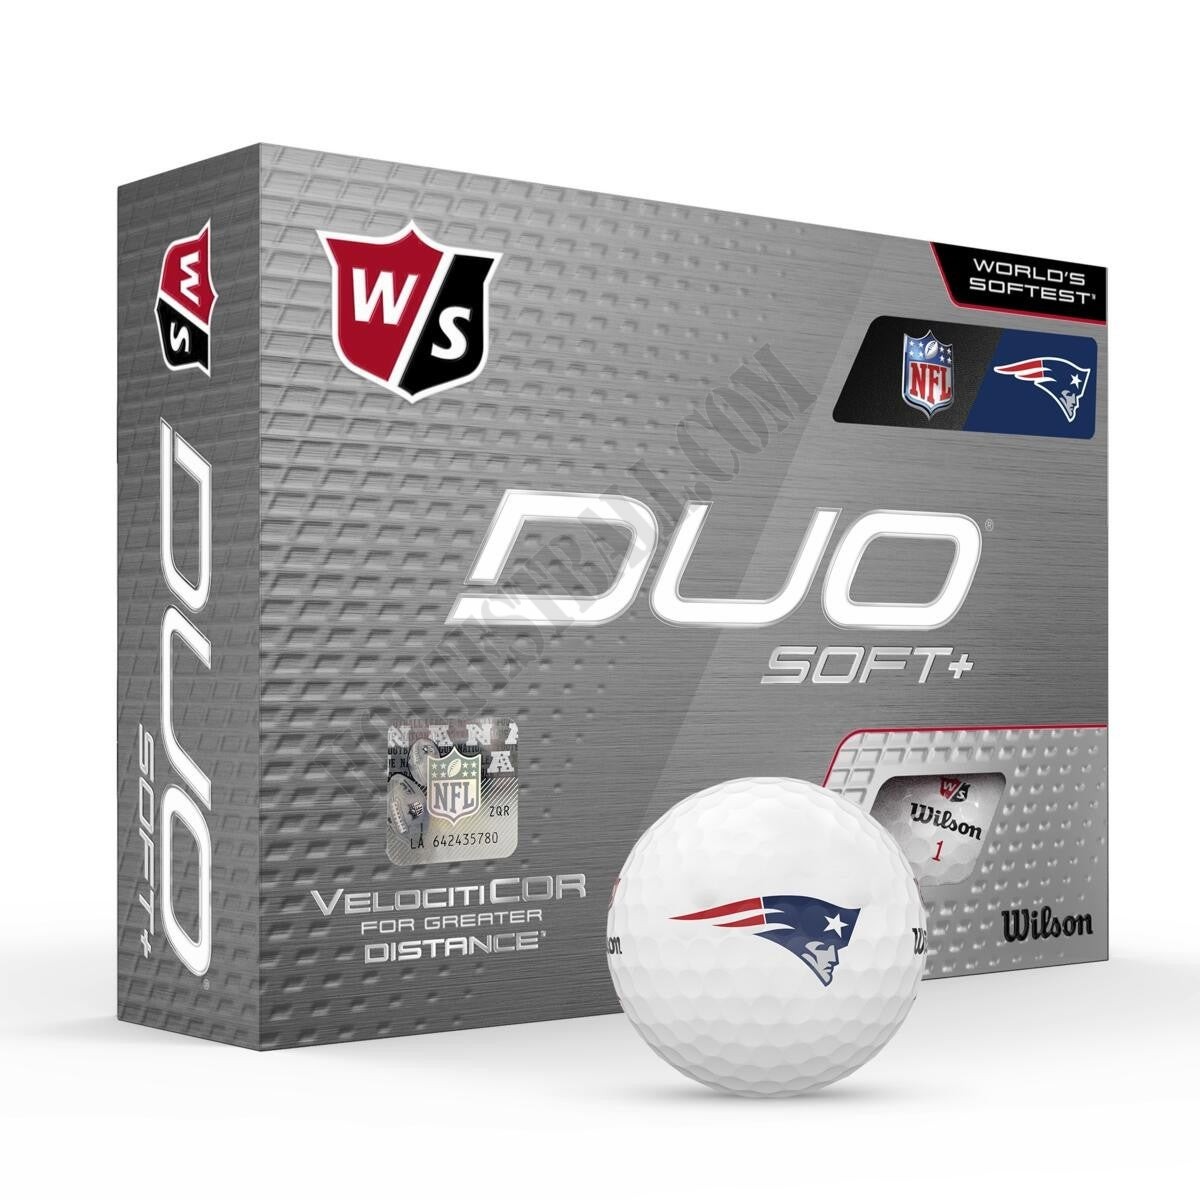 Duo Soft+ NFL Golf Balls - New England Patriots ● Wilson Promotions - -0